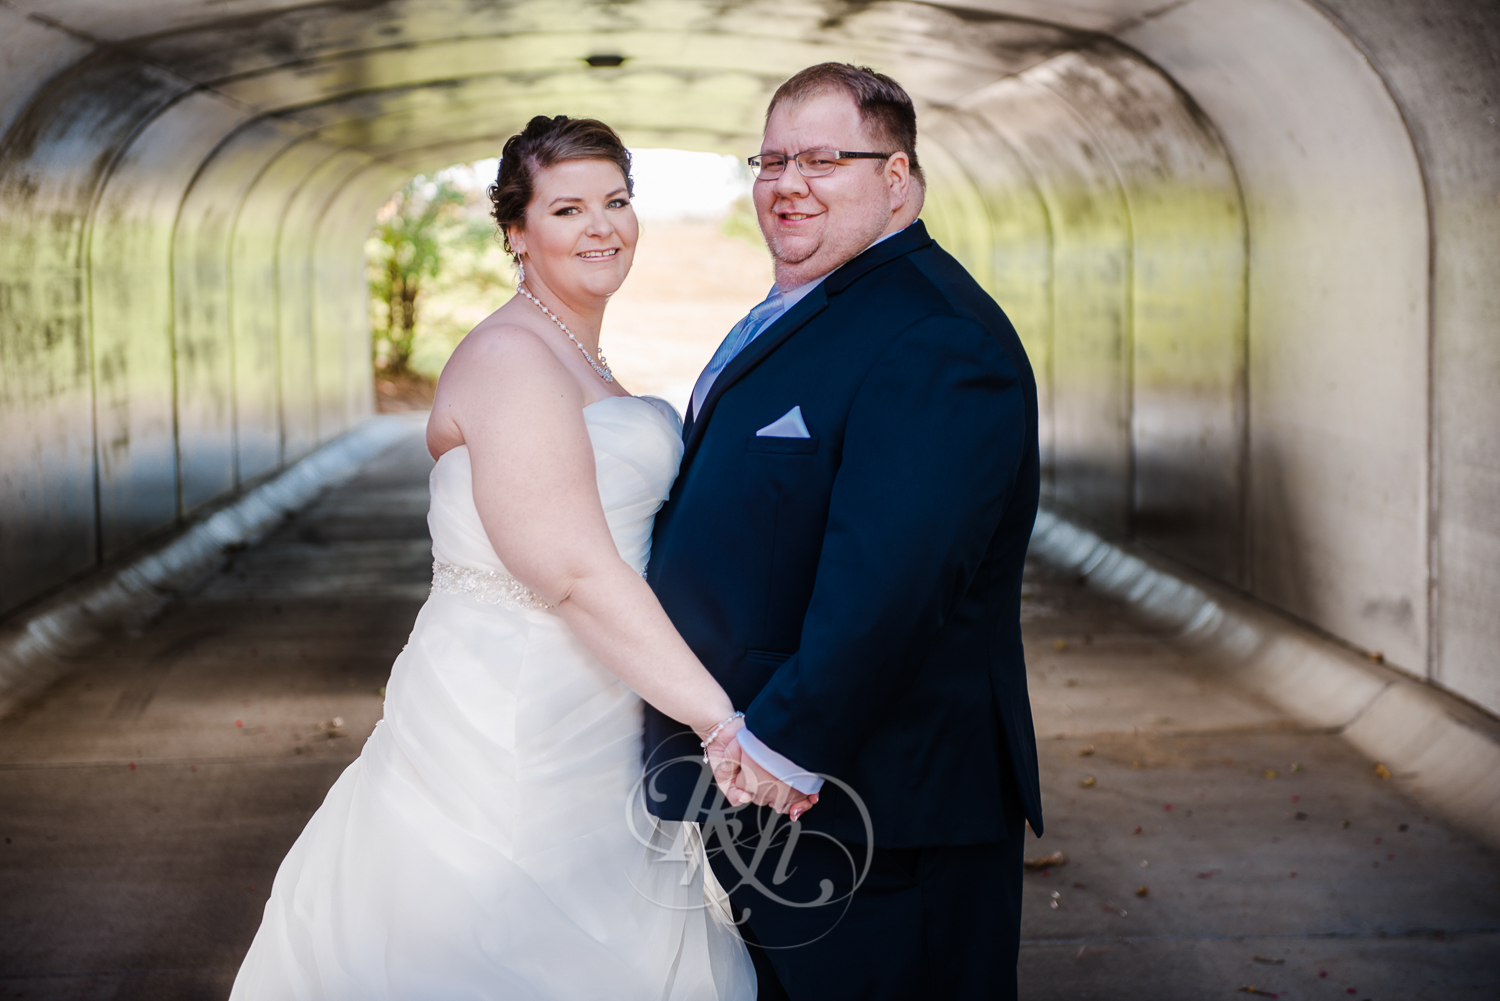  Woodbury Wedding Photography - Amber & Tristan - RKH Images-18 